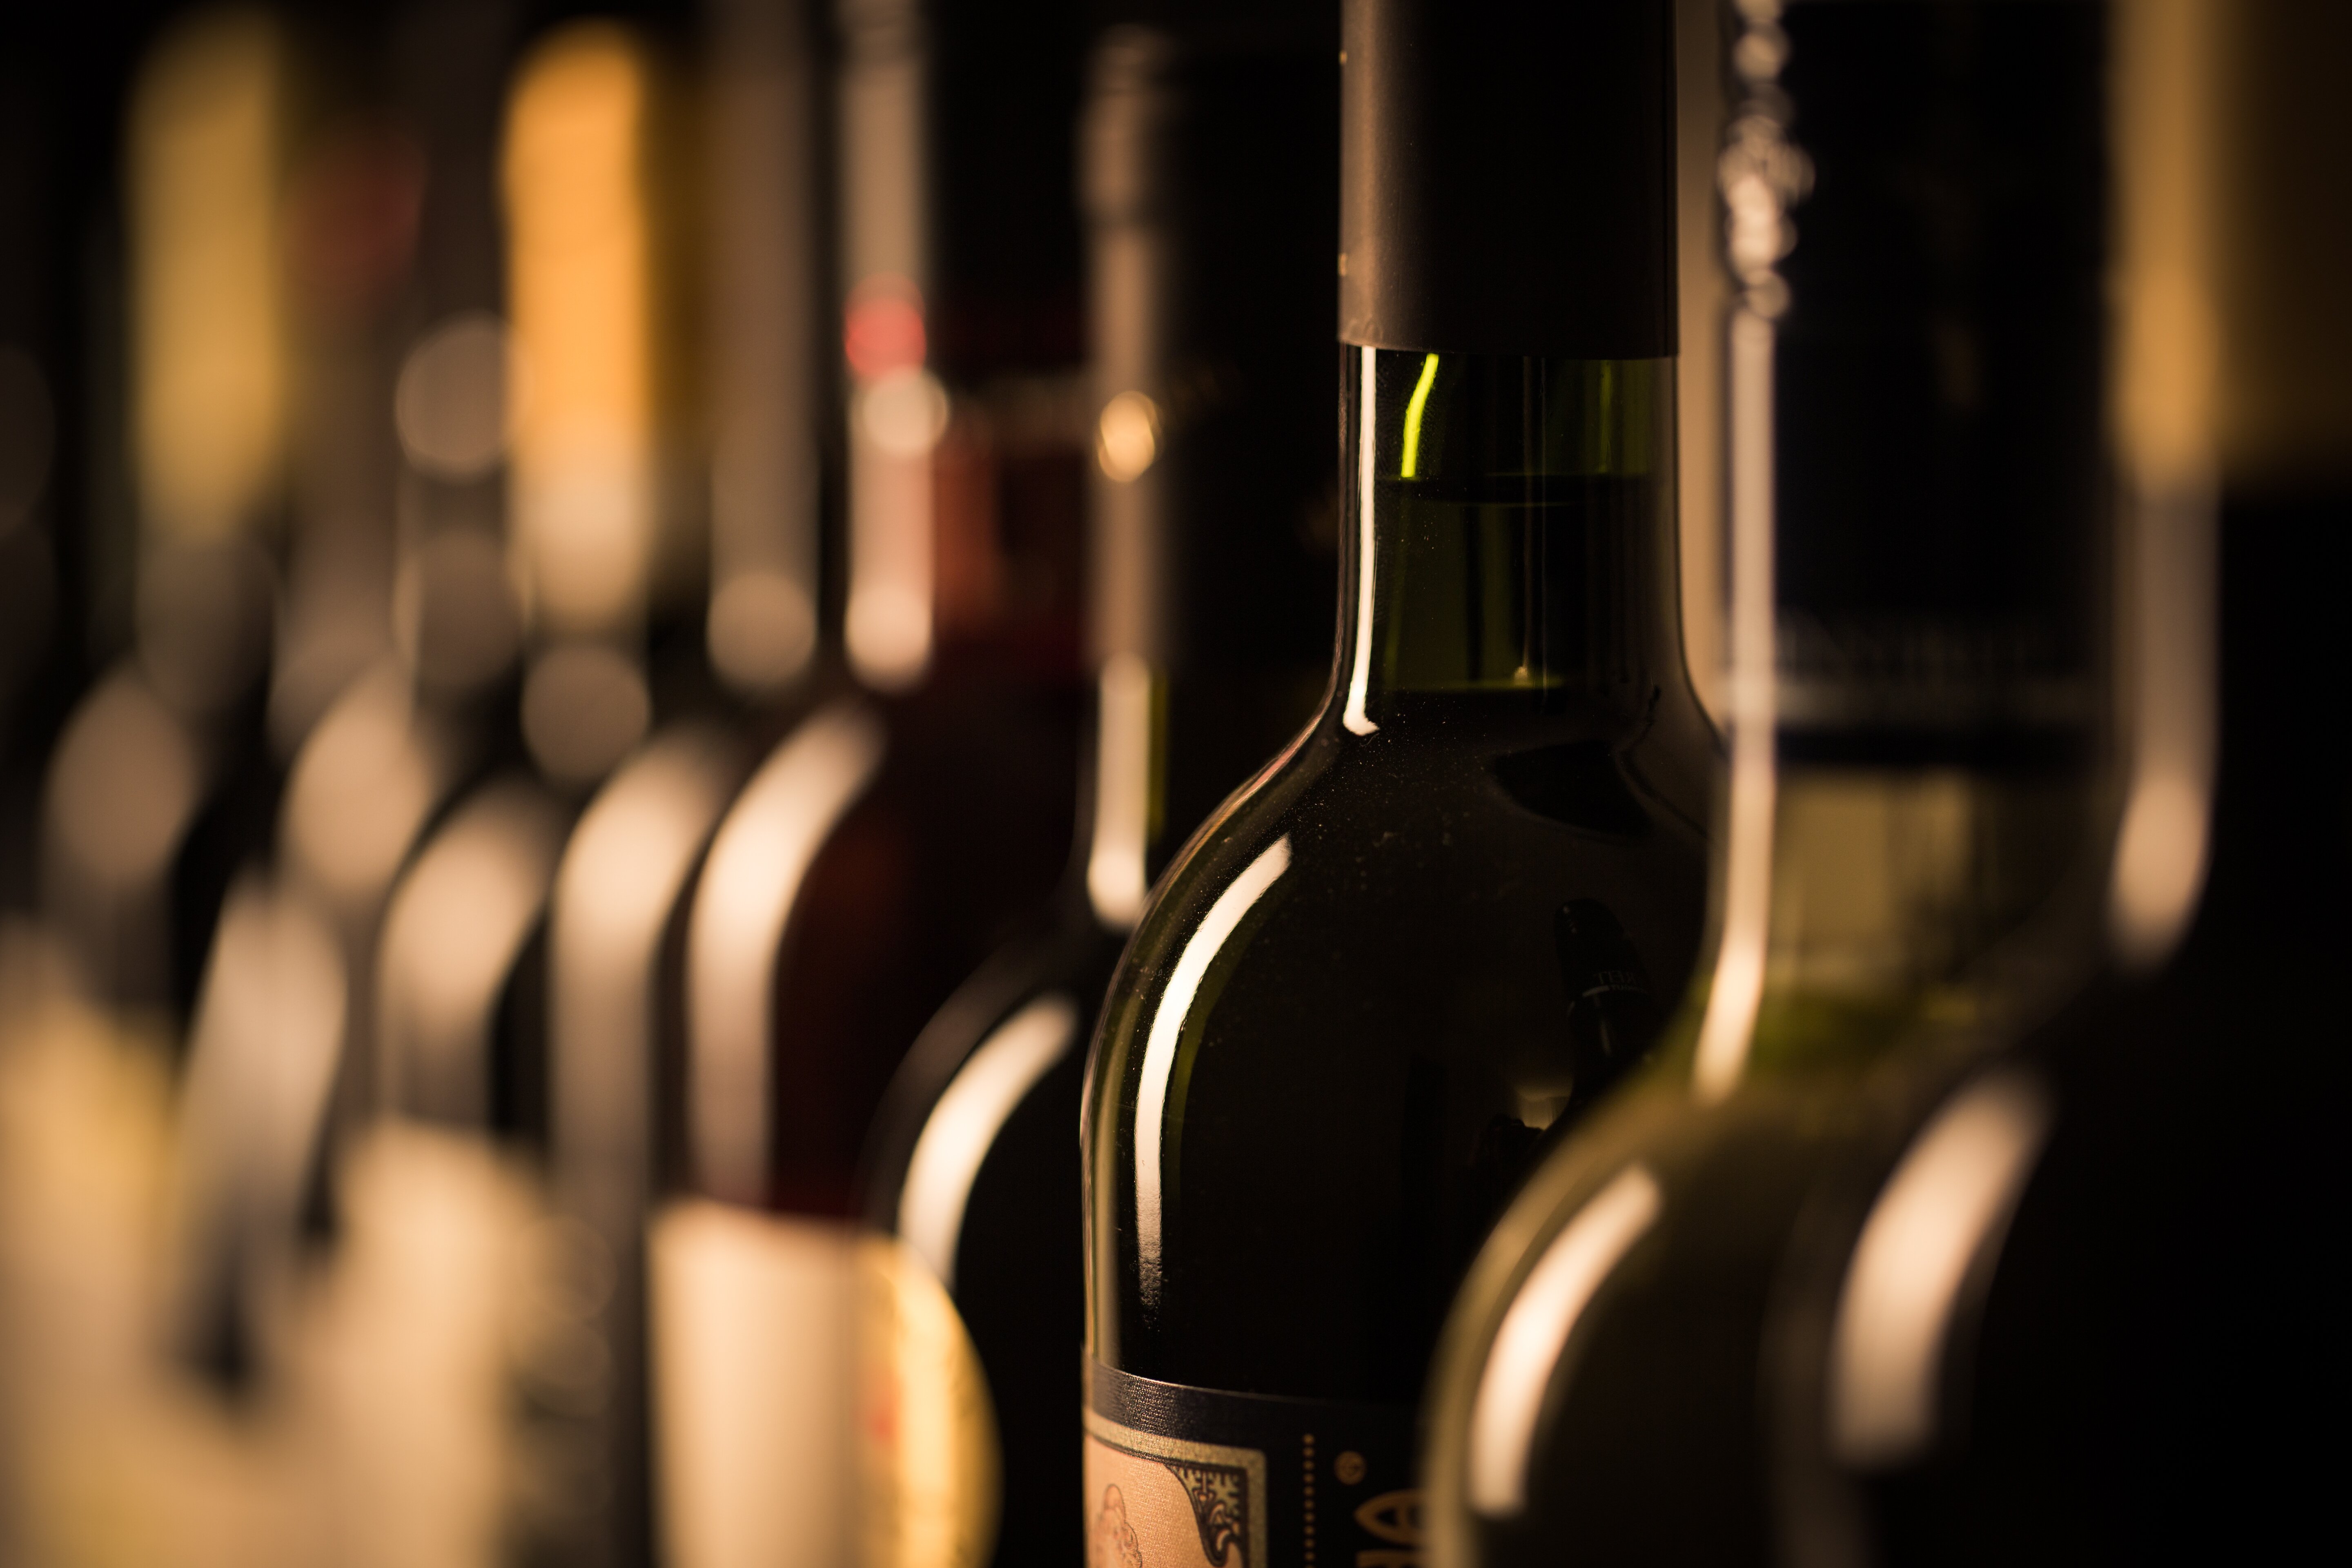 Coterie Holdings acquires Hallgarten & Novum Wines